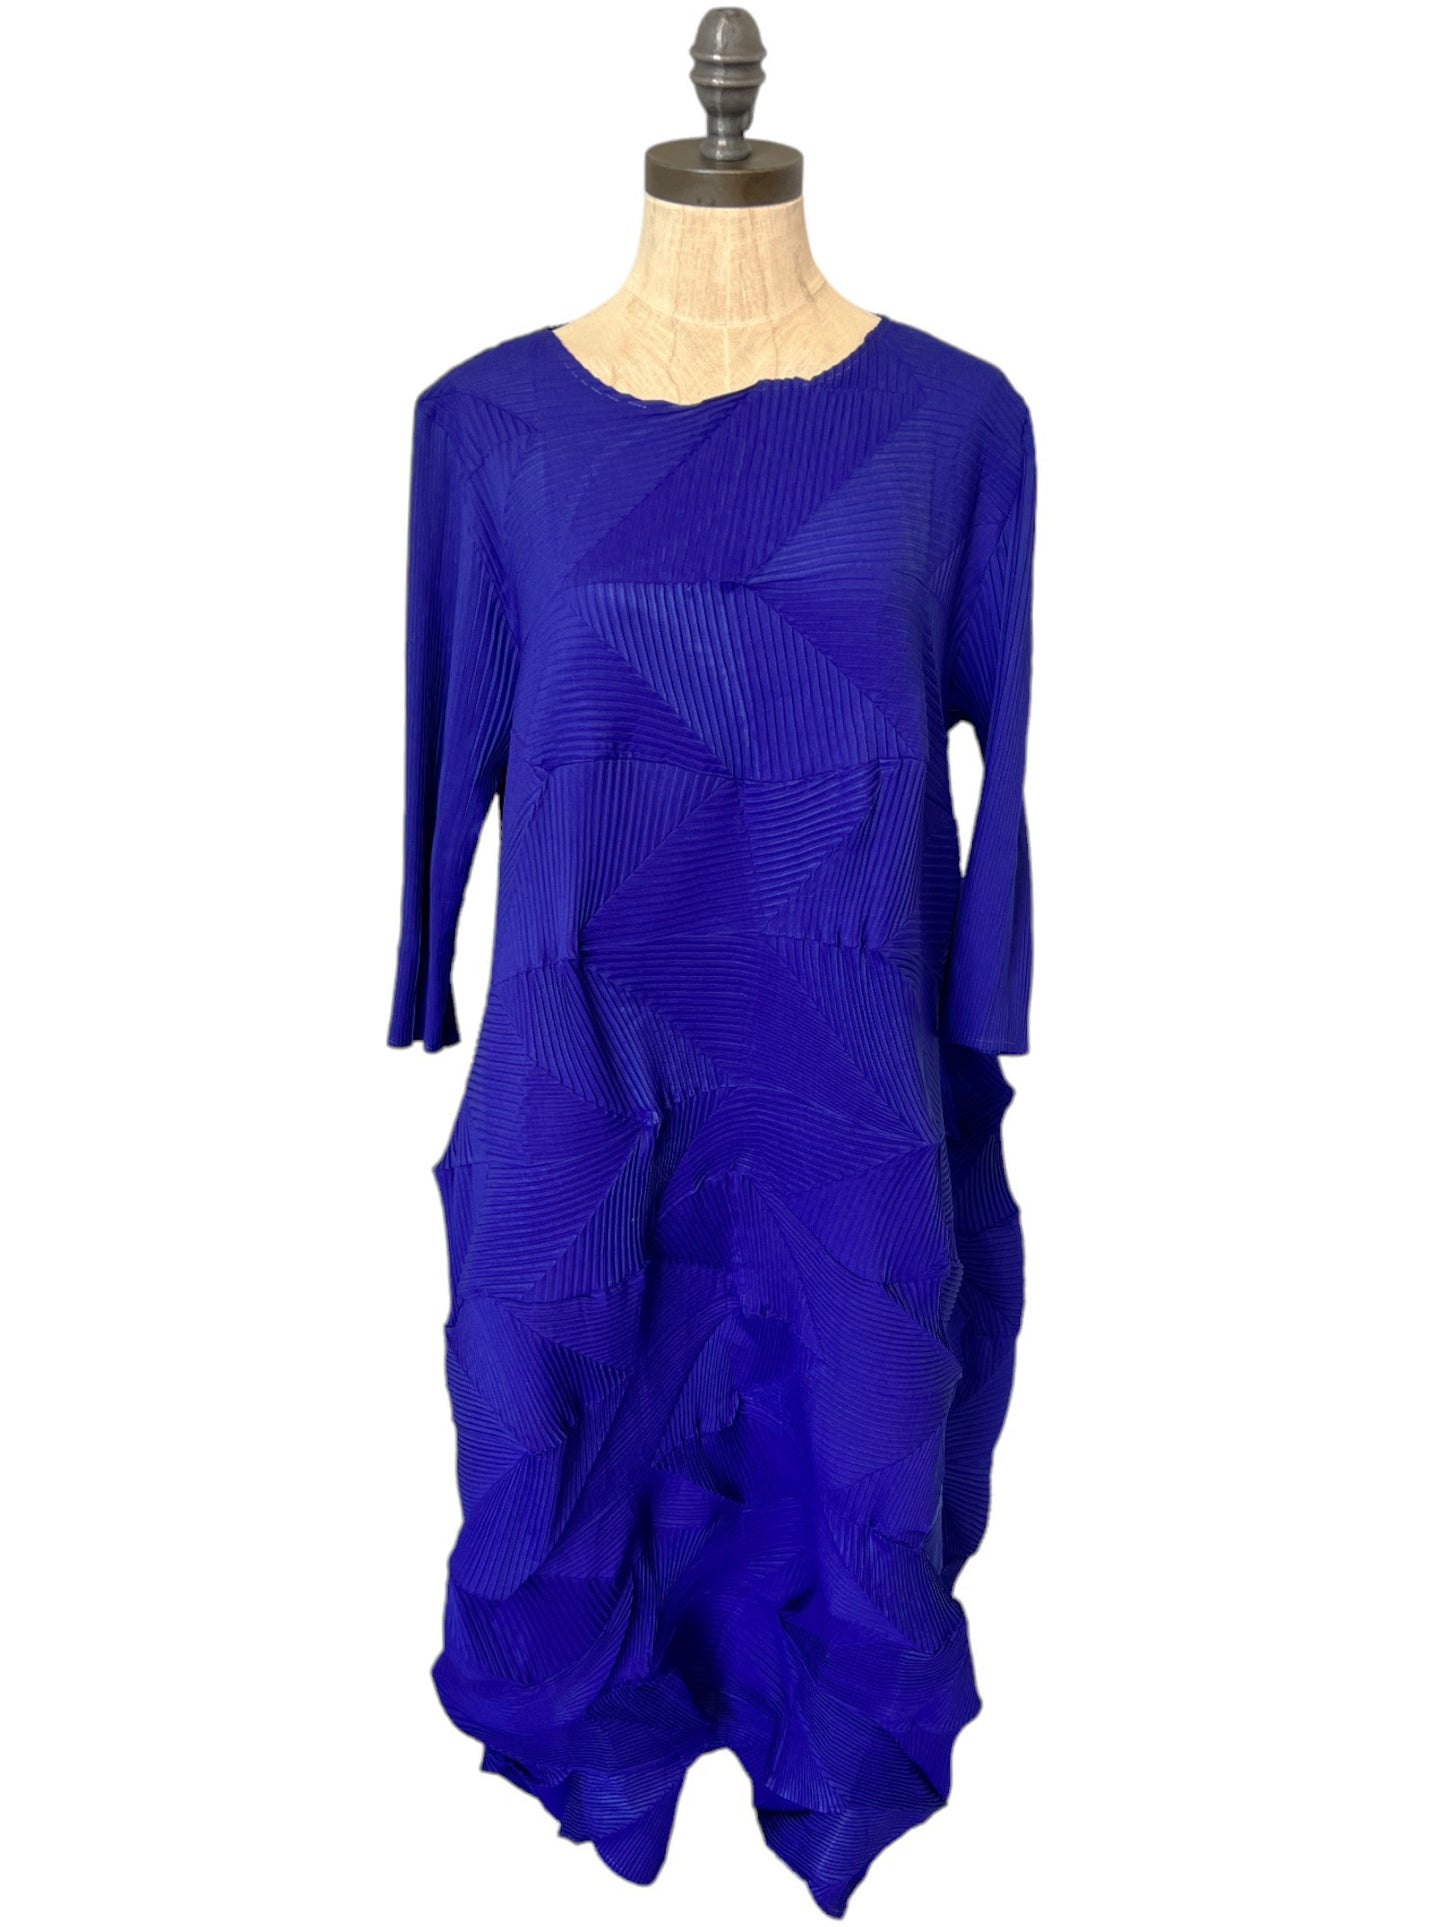 Perma Pleat Dress in Electric Blue